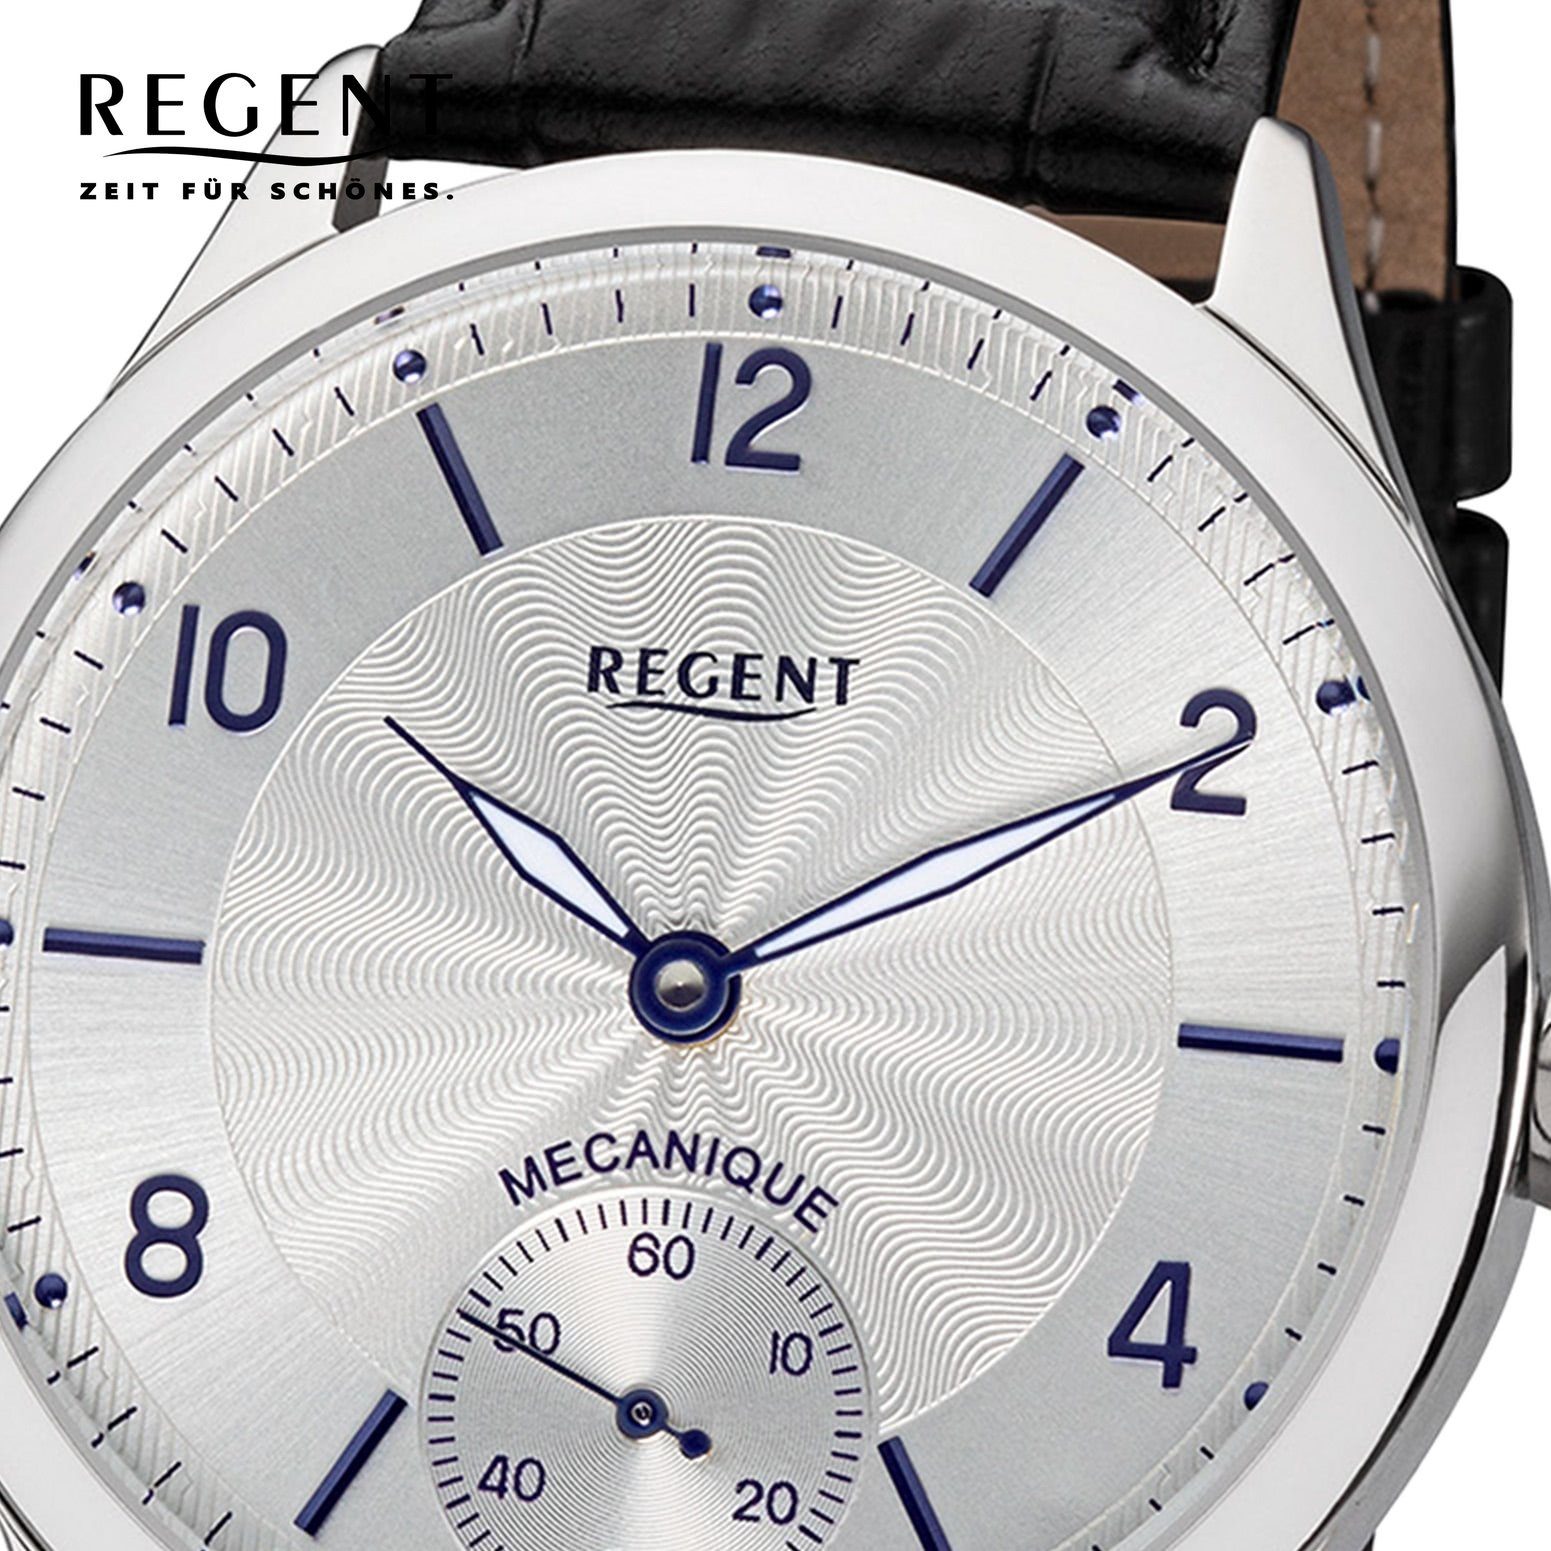 Herren Armbanduhr Analoganzeige, Armbanduhr Regent rund, Regent (ca. Herren Lederbandarmband 42,5mm), Quarzuhr groß